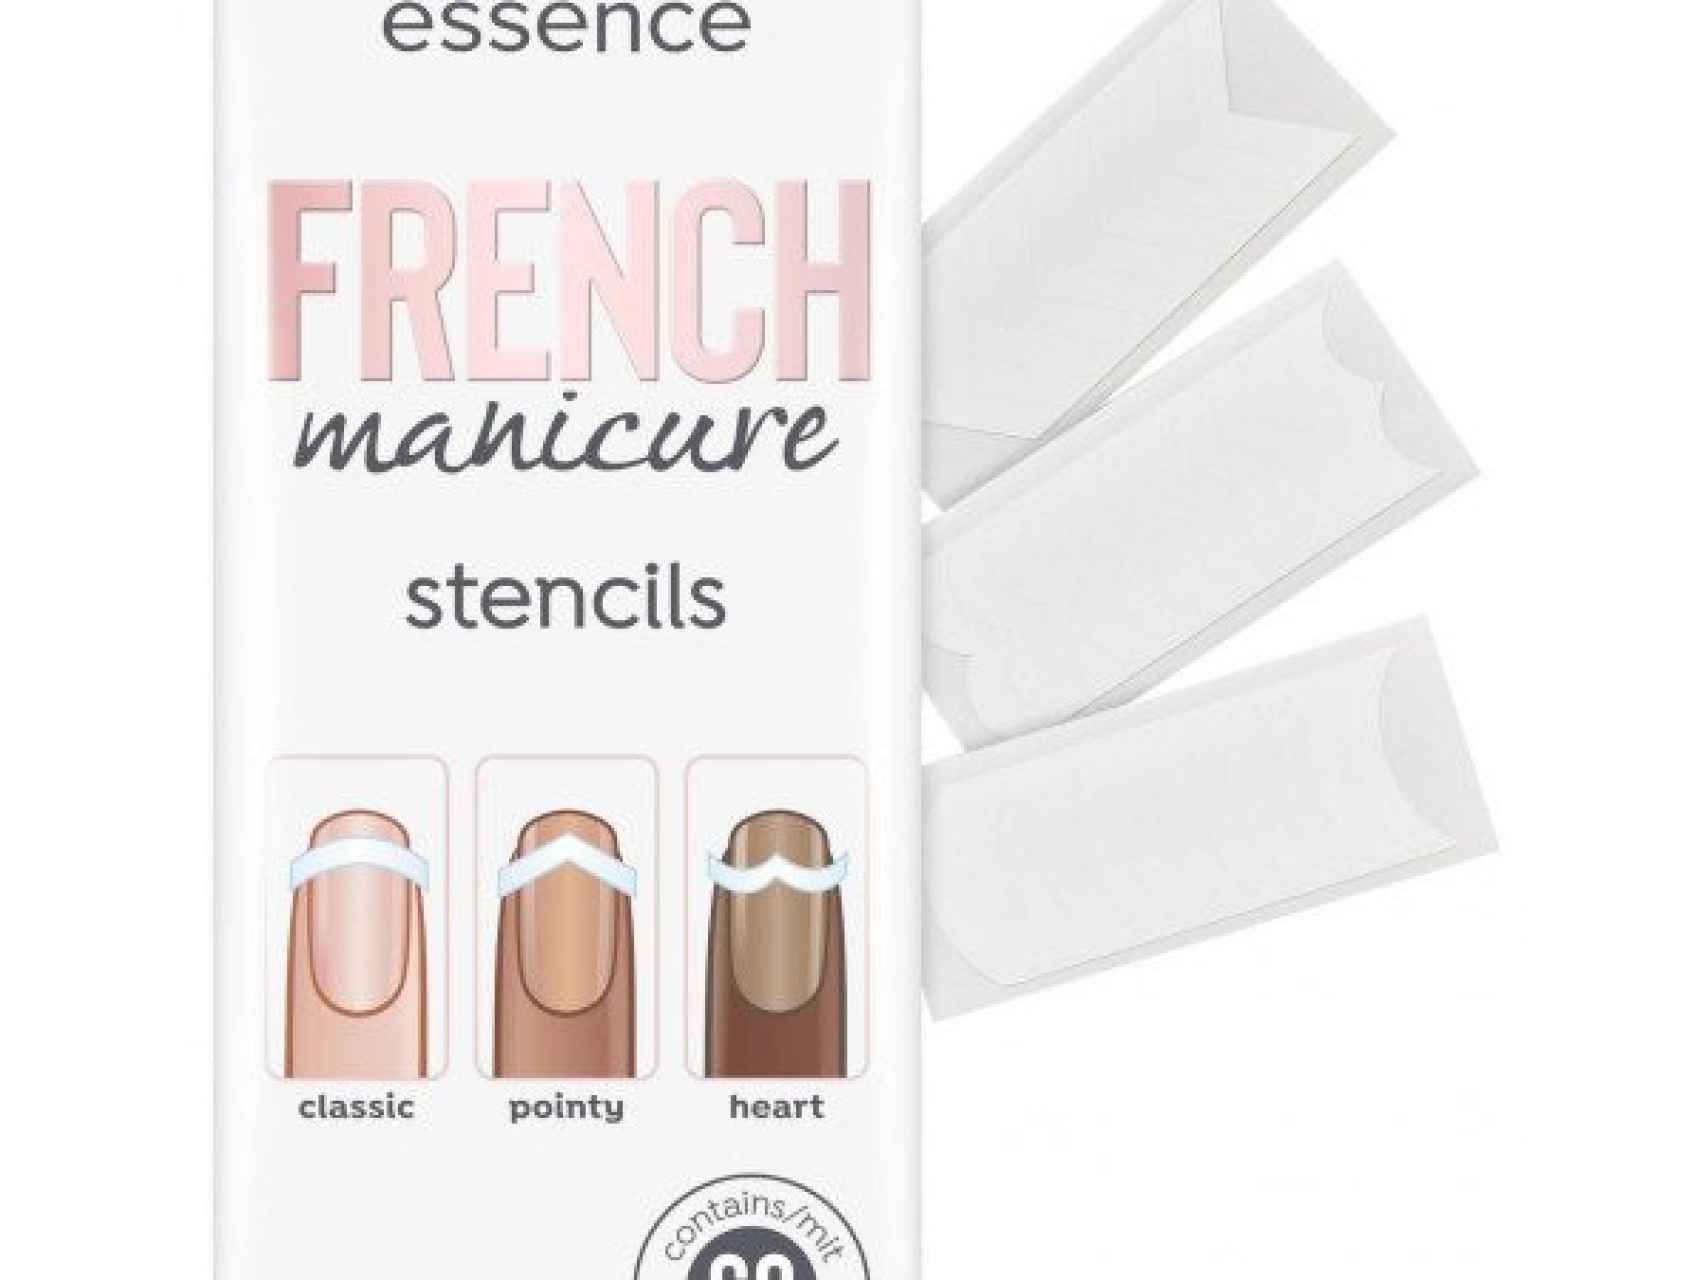 French manicure Stencils de Essence